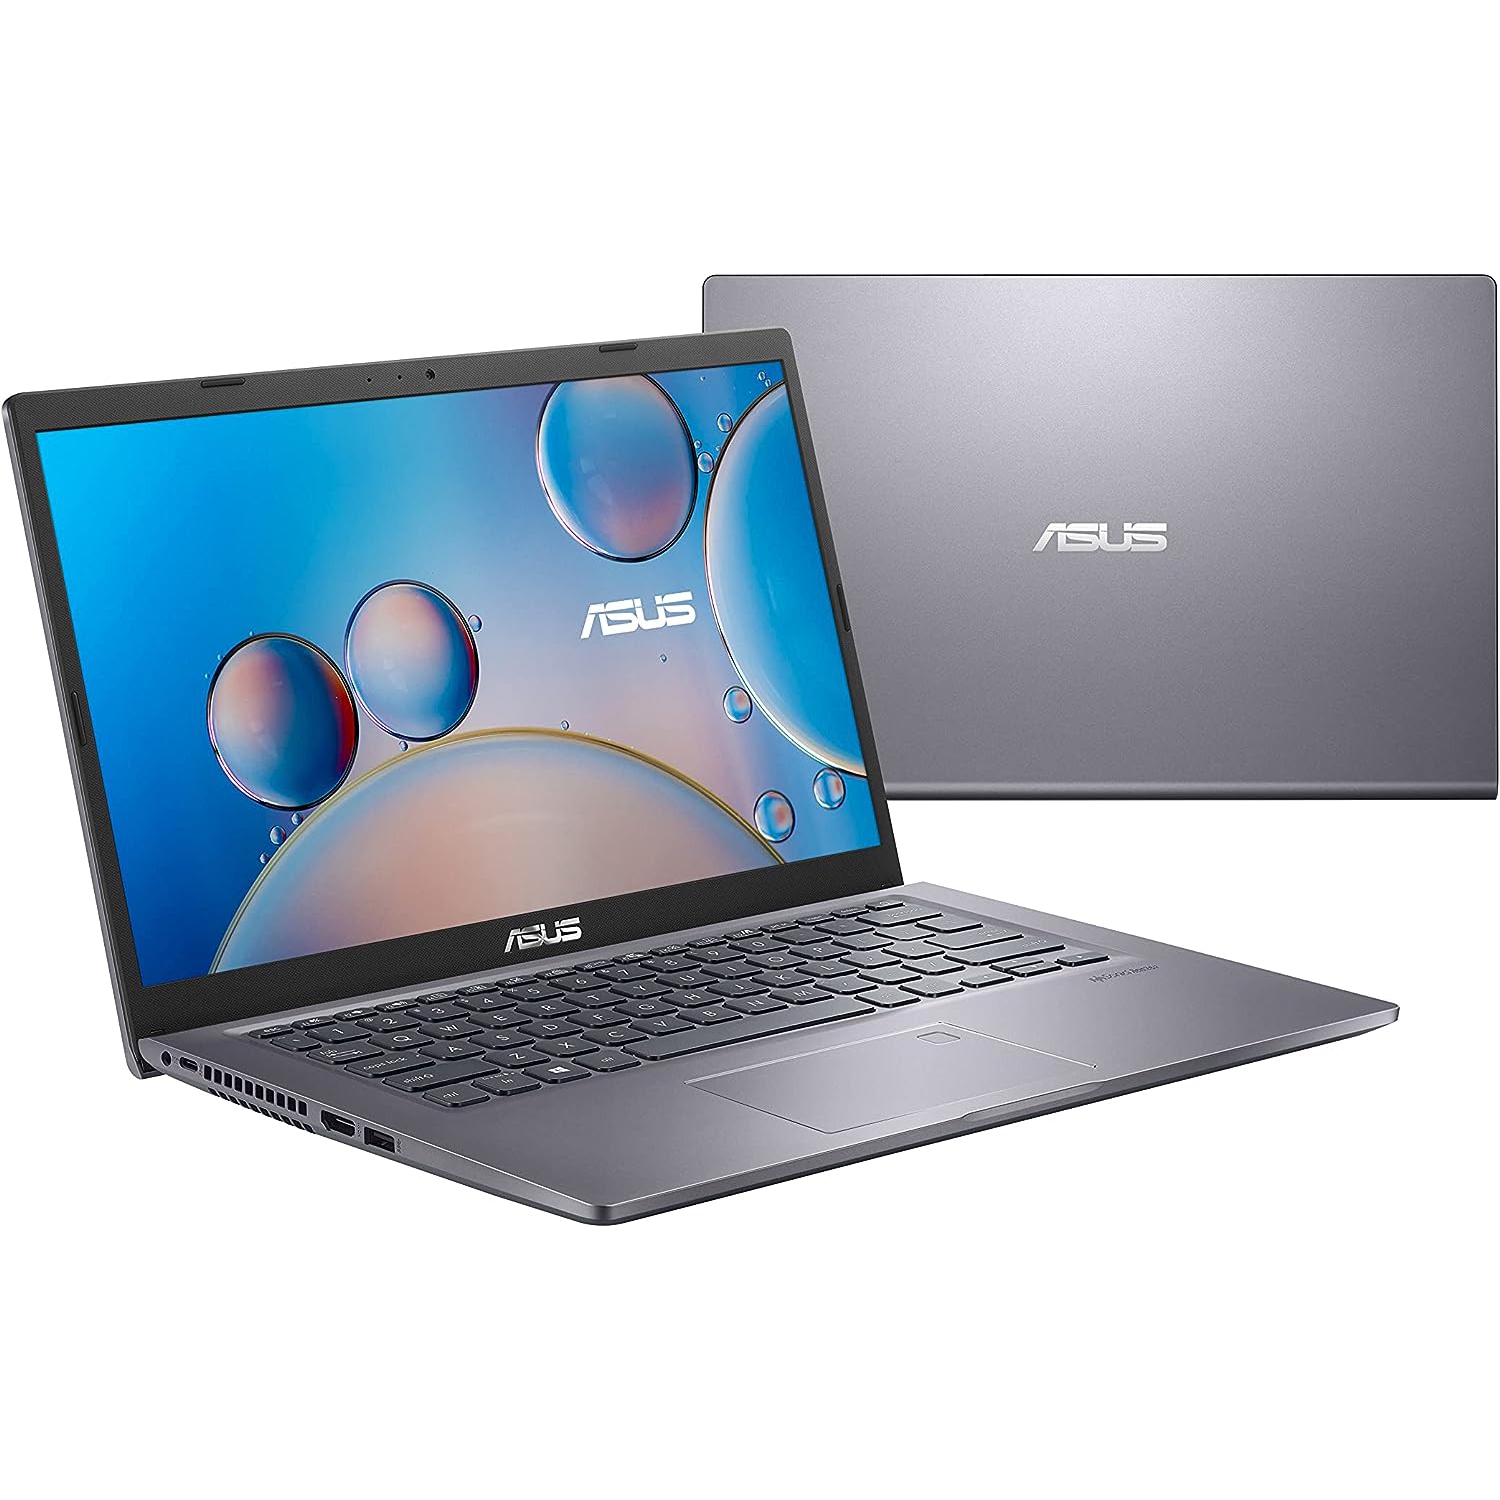 ASUS VivoBook 14 X415 Thin and Light Laptop, 14” FHD Display, Intel Core i3-1115G4 Processor, Intel UHD Graphics, 8GB DDR4 RAM, 128GB PCIe SSD, Windows 11 Home, X415EA-AS31-CA